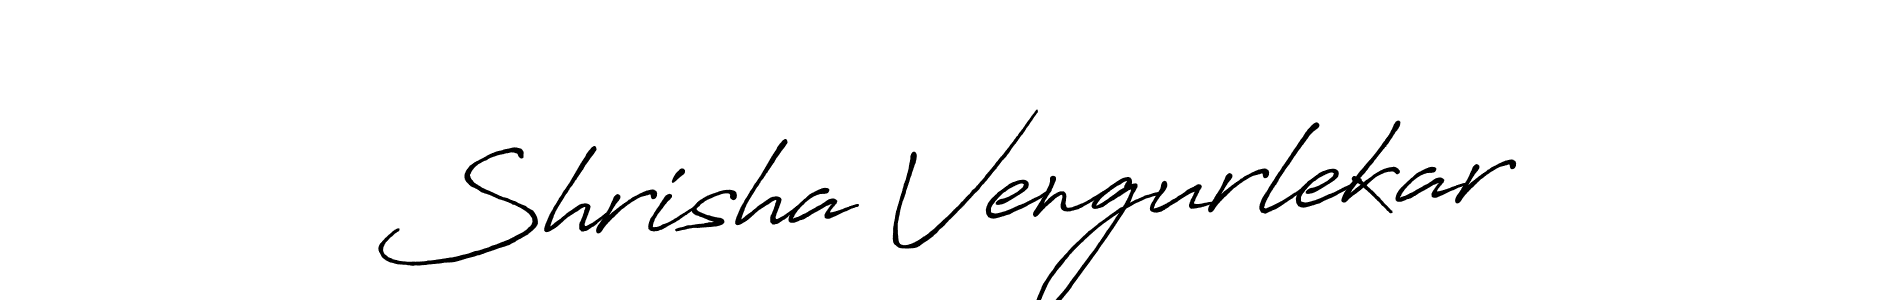 Make a beautiful signature design for name Shrisha Vengurlekar. Use this online signature maker to create a handwritten signature for free. Shrisha Vengurlekar signature style 7 images and pictures png